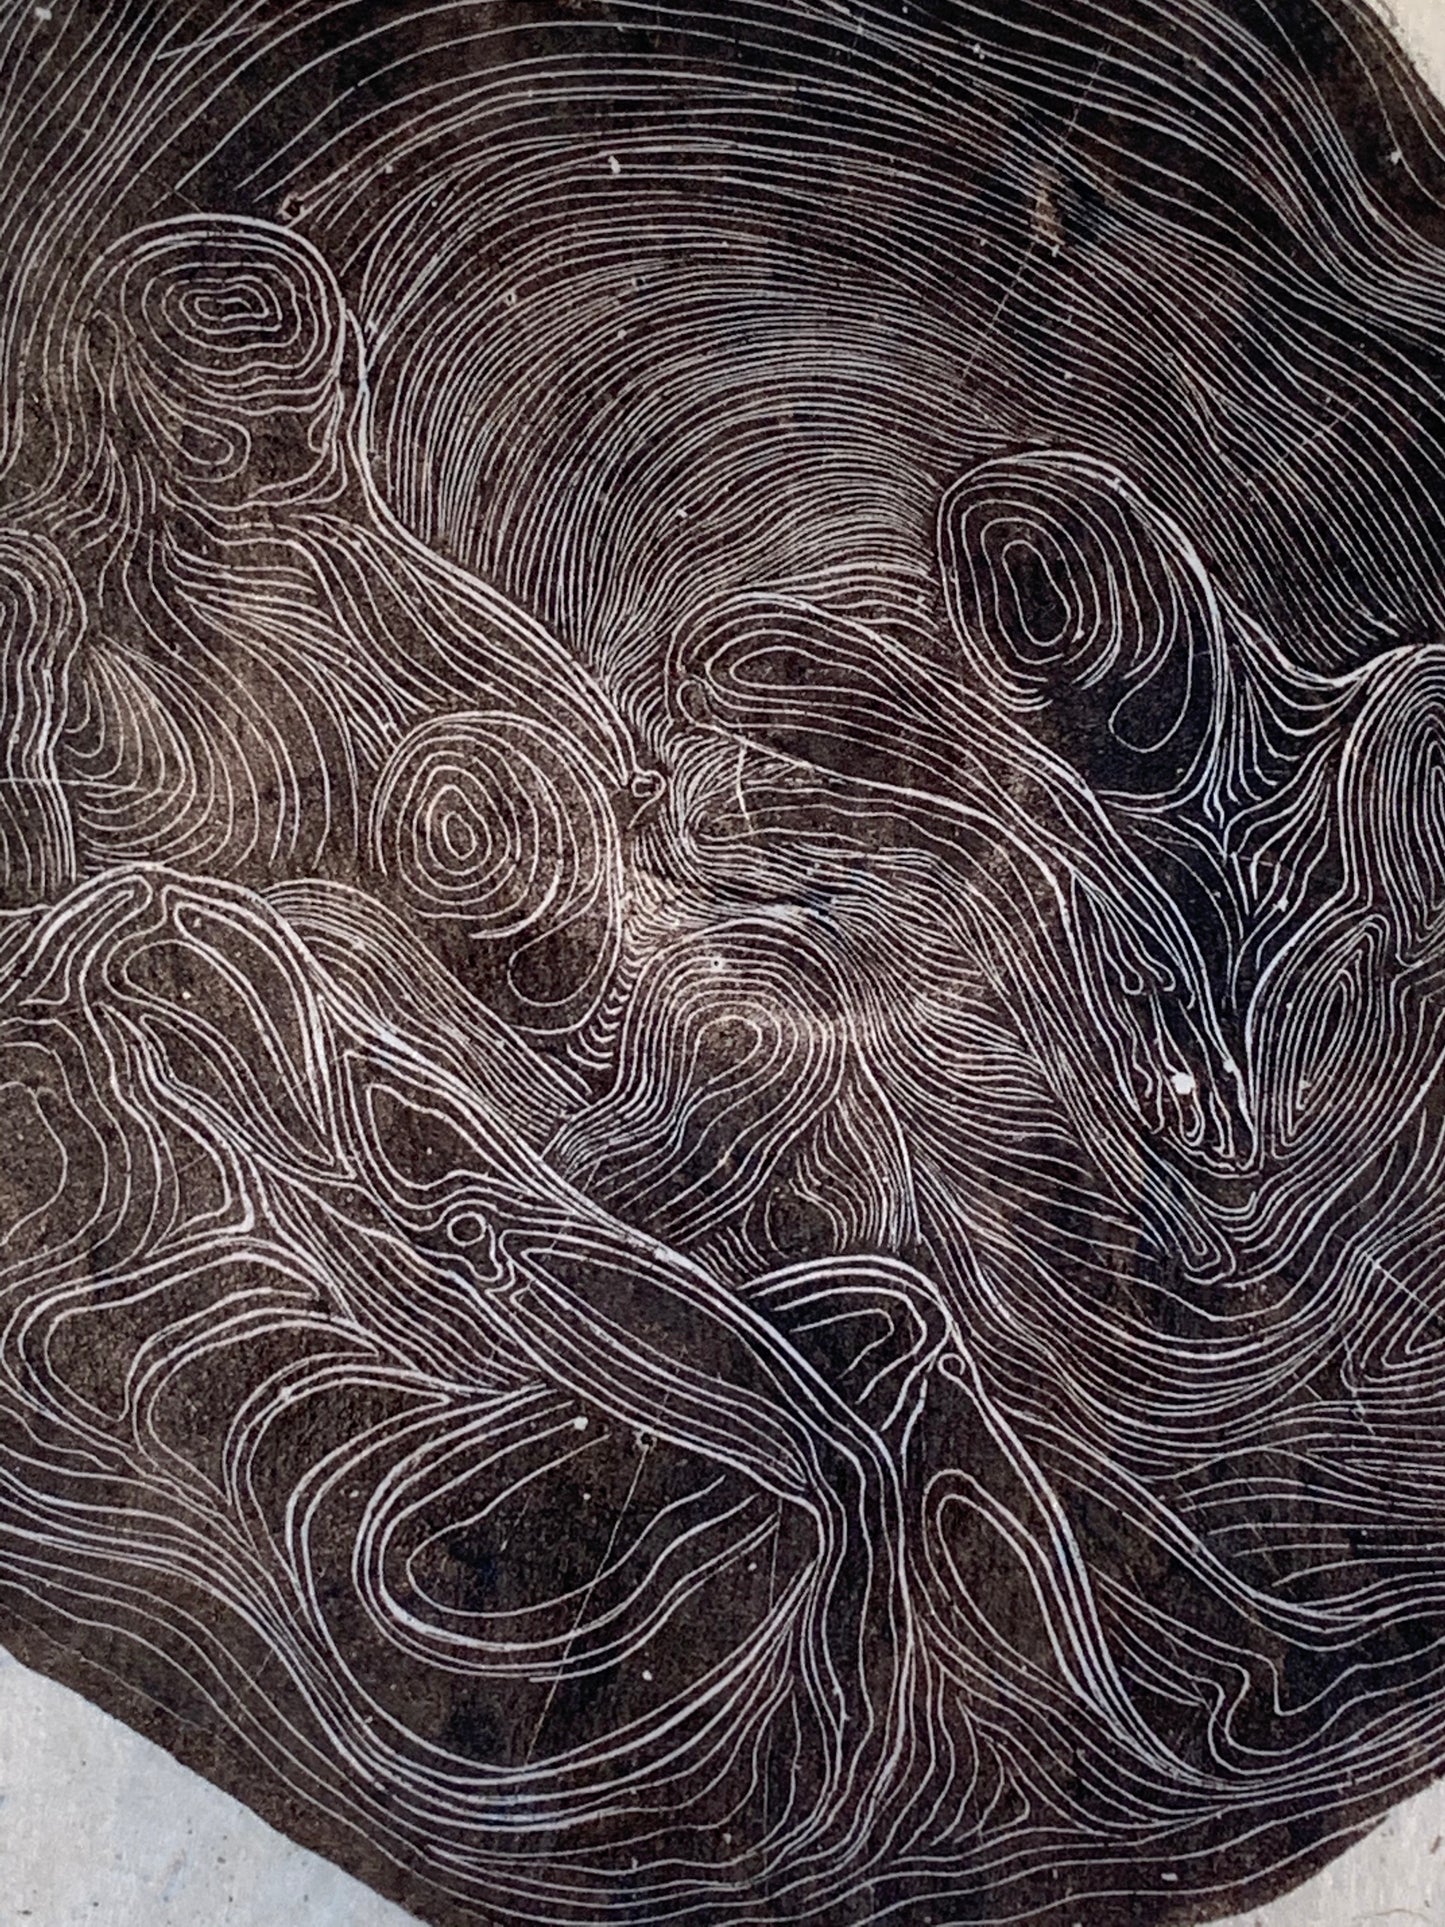 Winter Sleeping Hibernation Figures Life of Tree Rings Original Wood Engraving